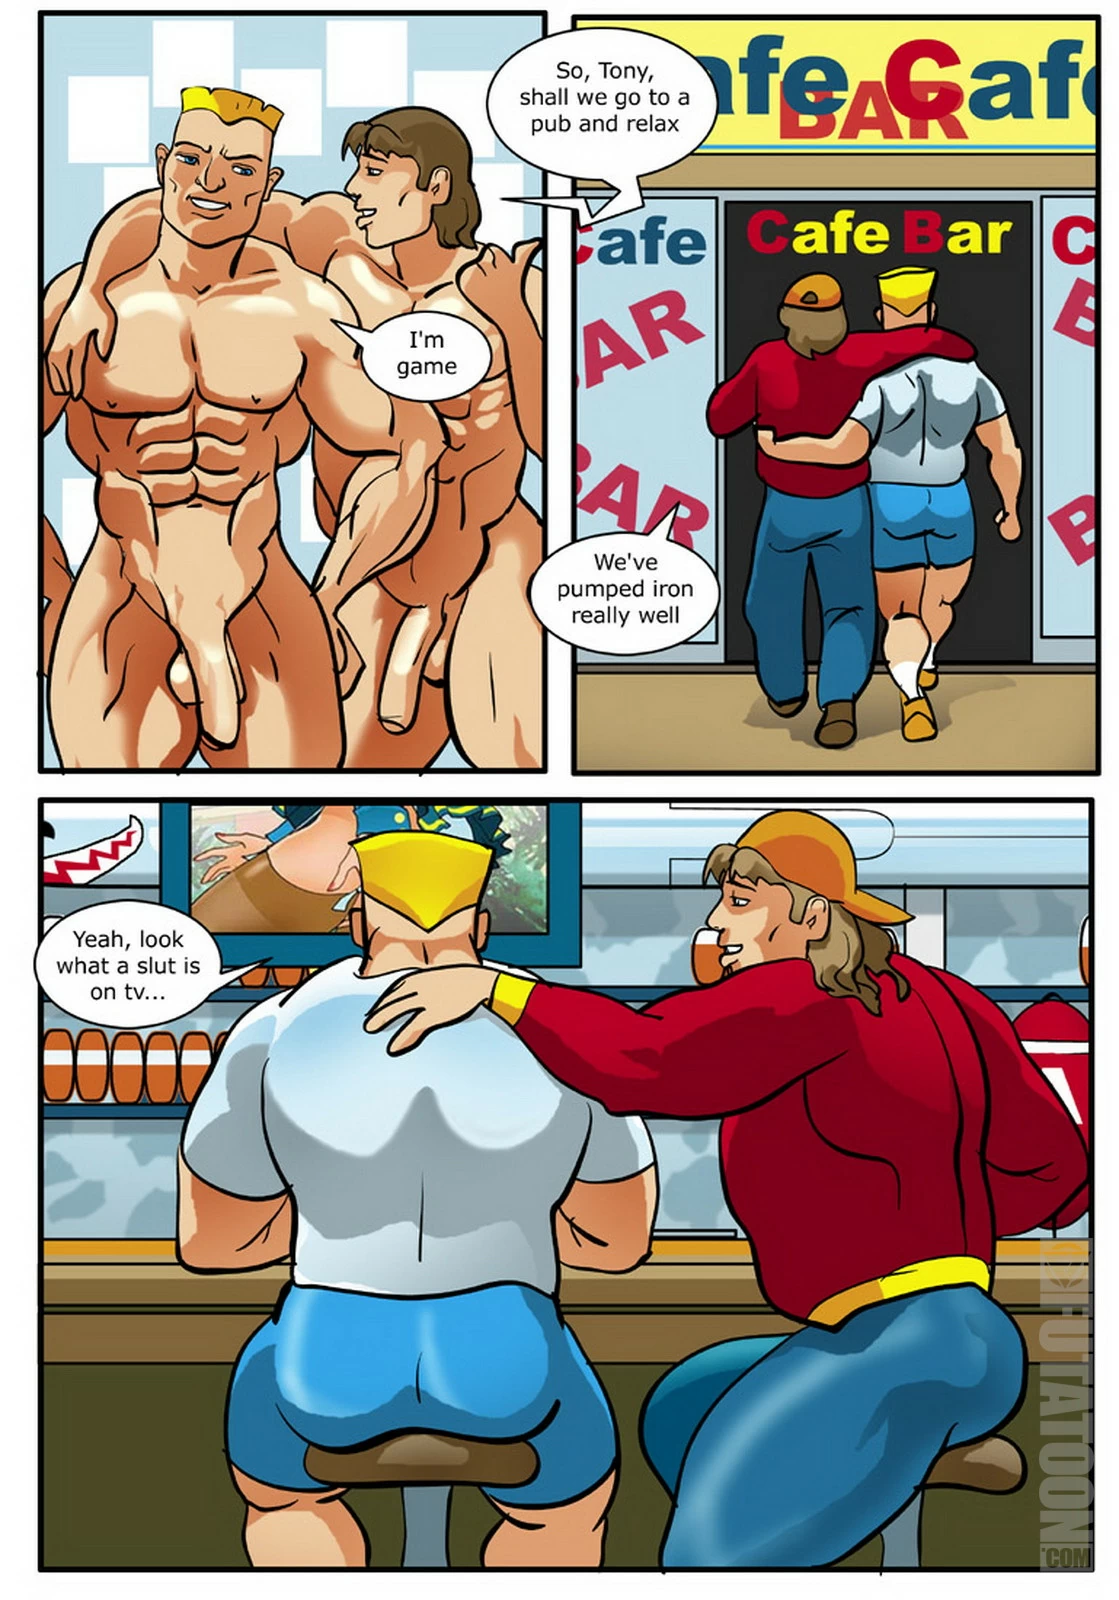 futanari threesome comics muscle gay